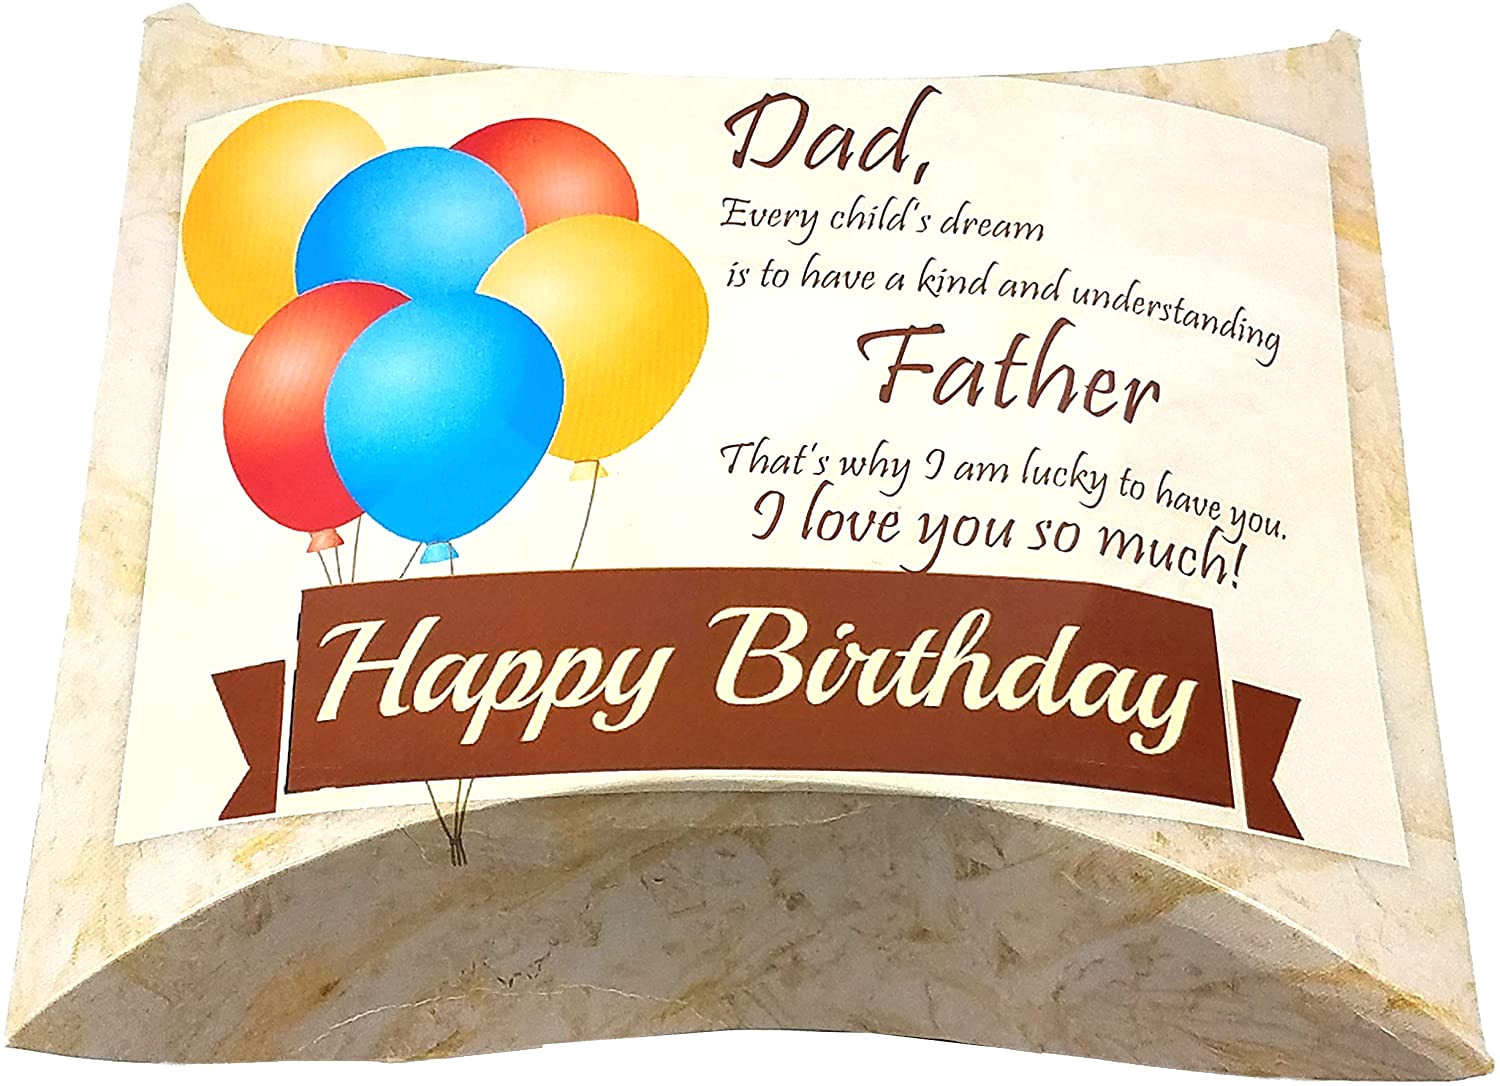 Happy Birthday Amazon Gift Card Amazon Com Happy Birthday Dad Pillow Greeting Gift Card Box